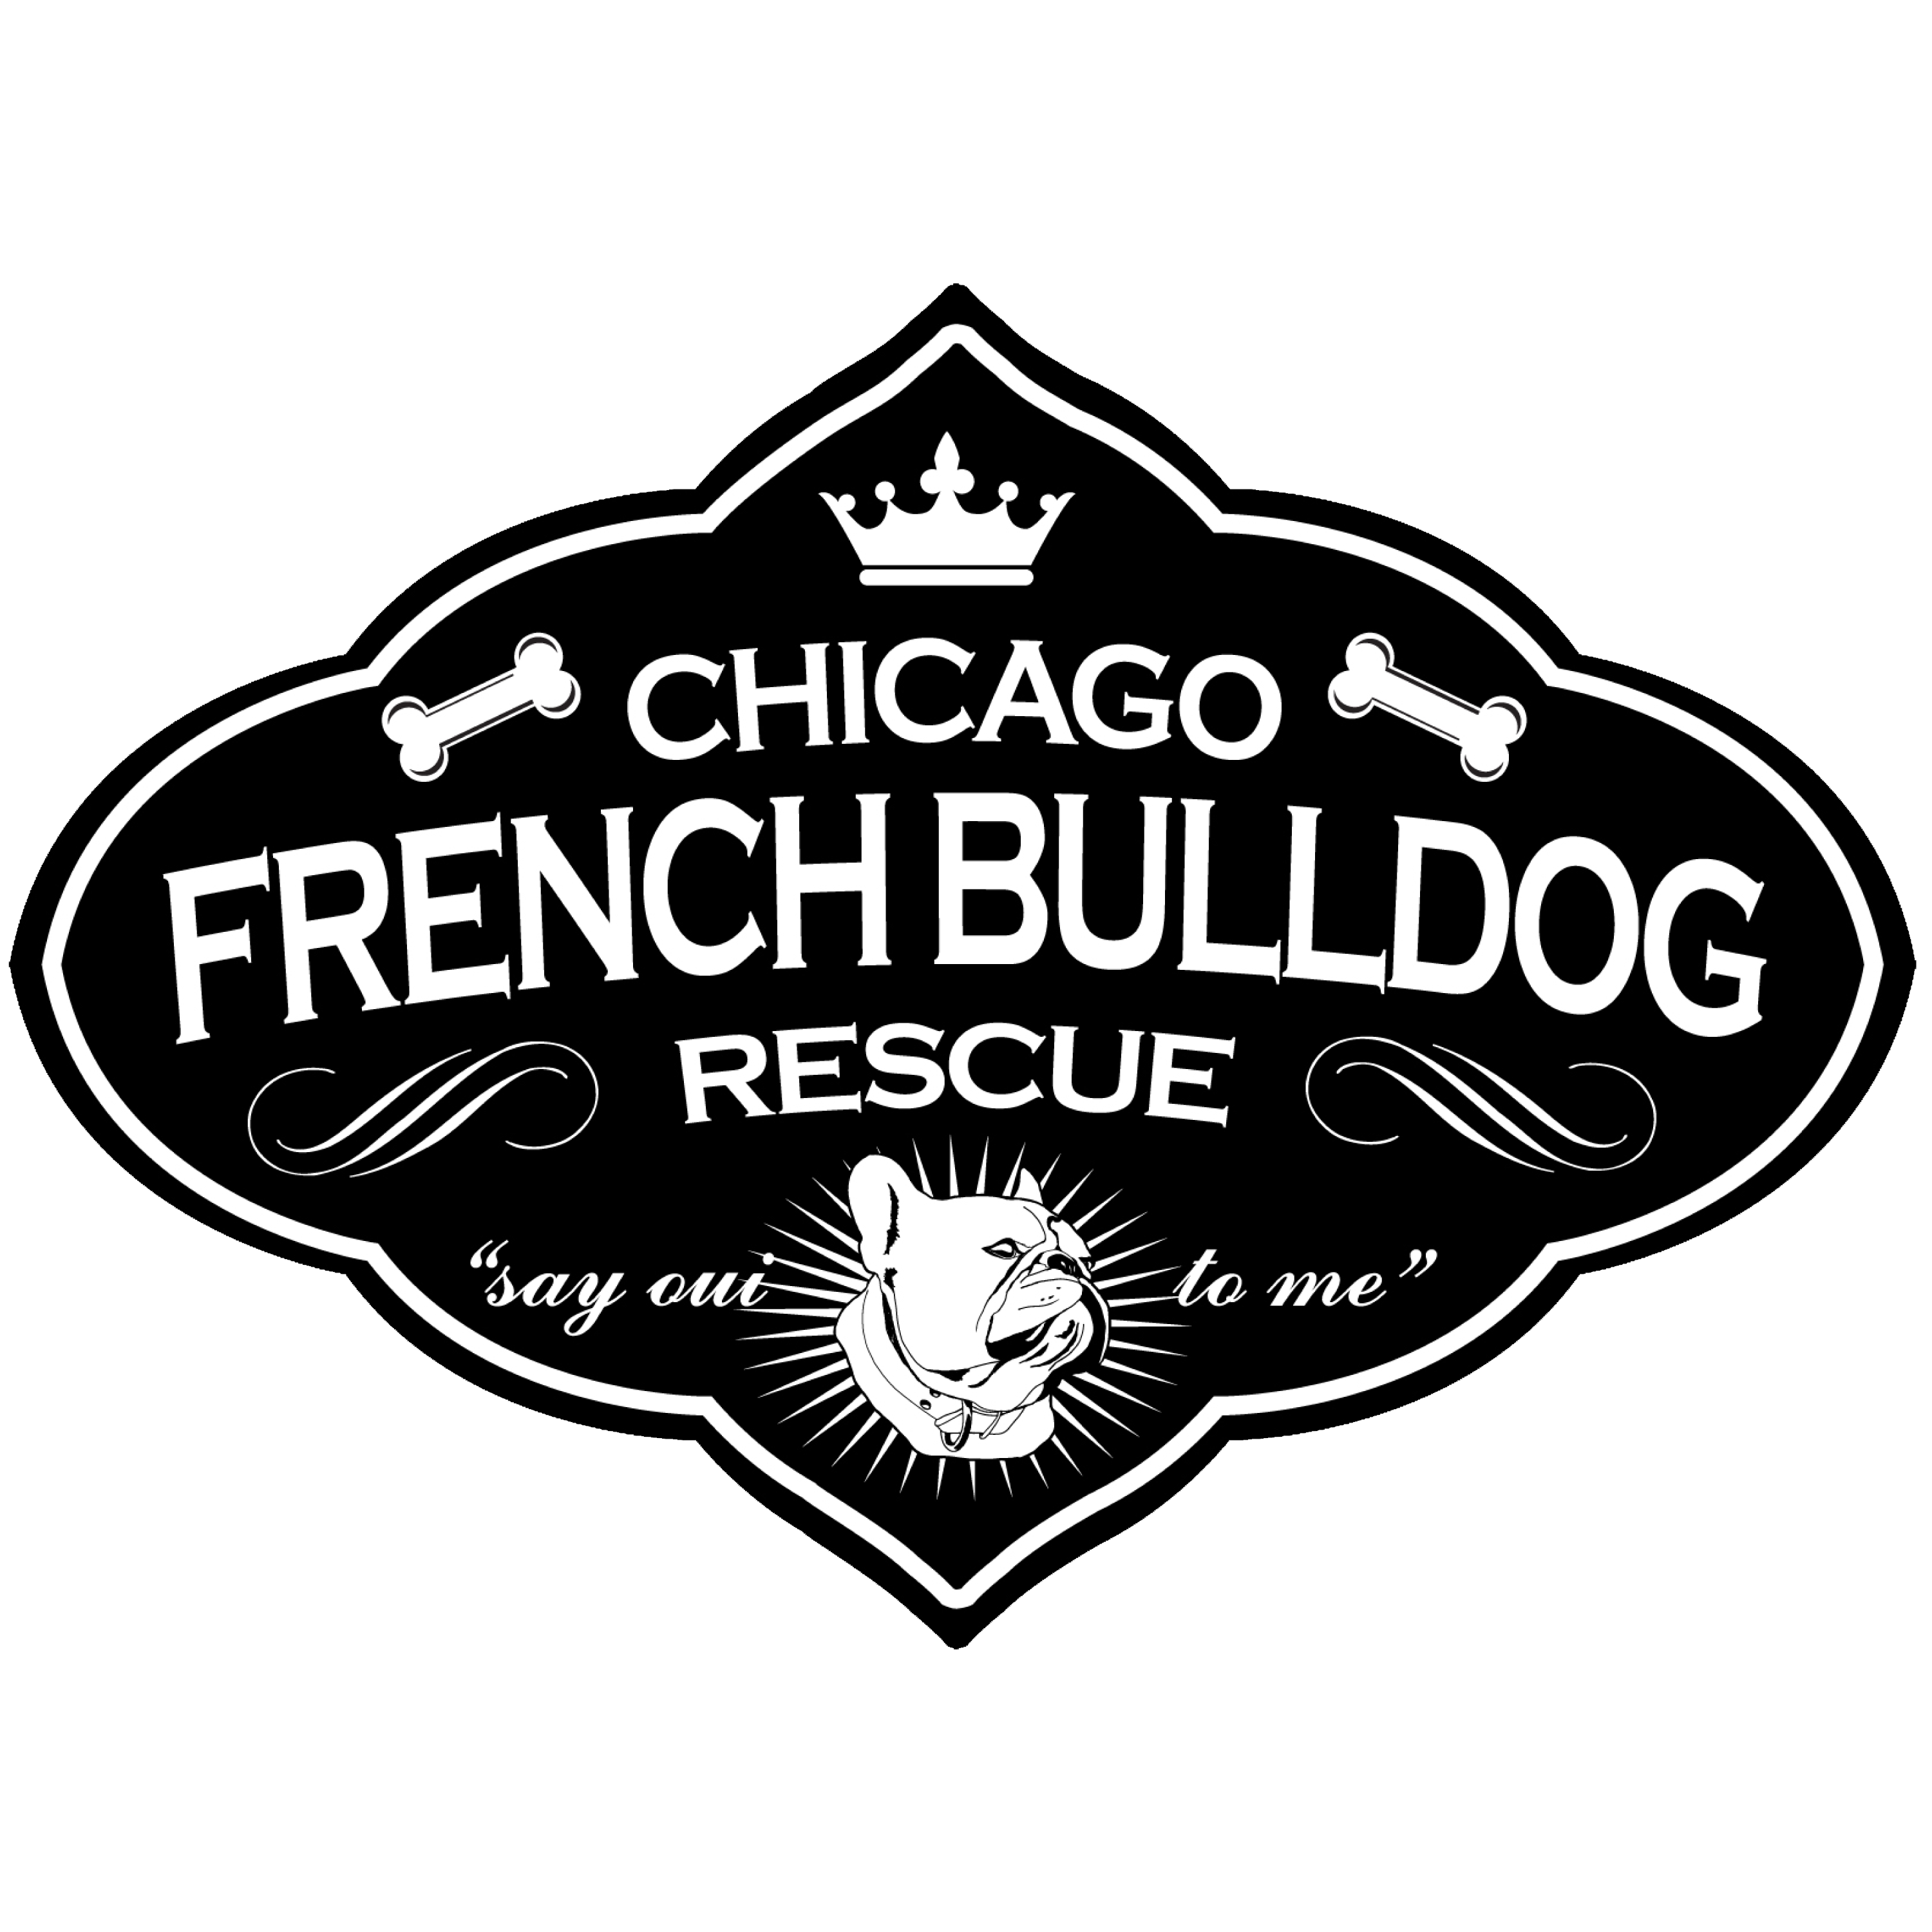 Chicago French Bulldog Rescue logo